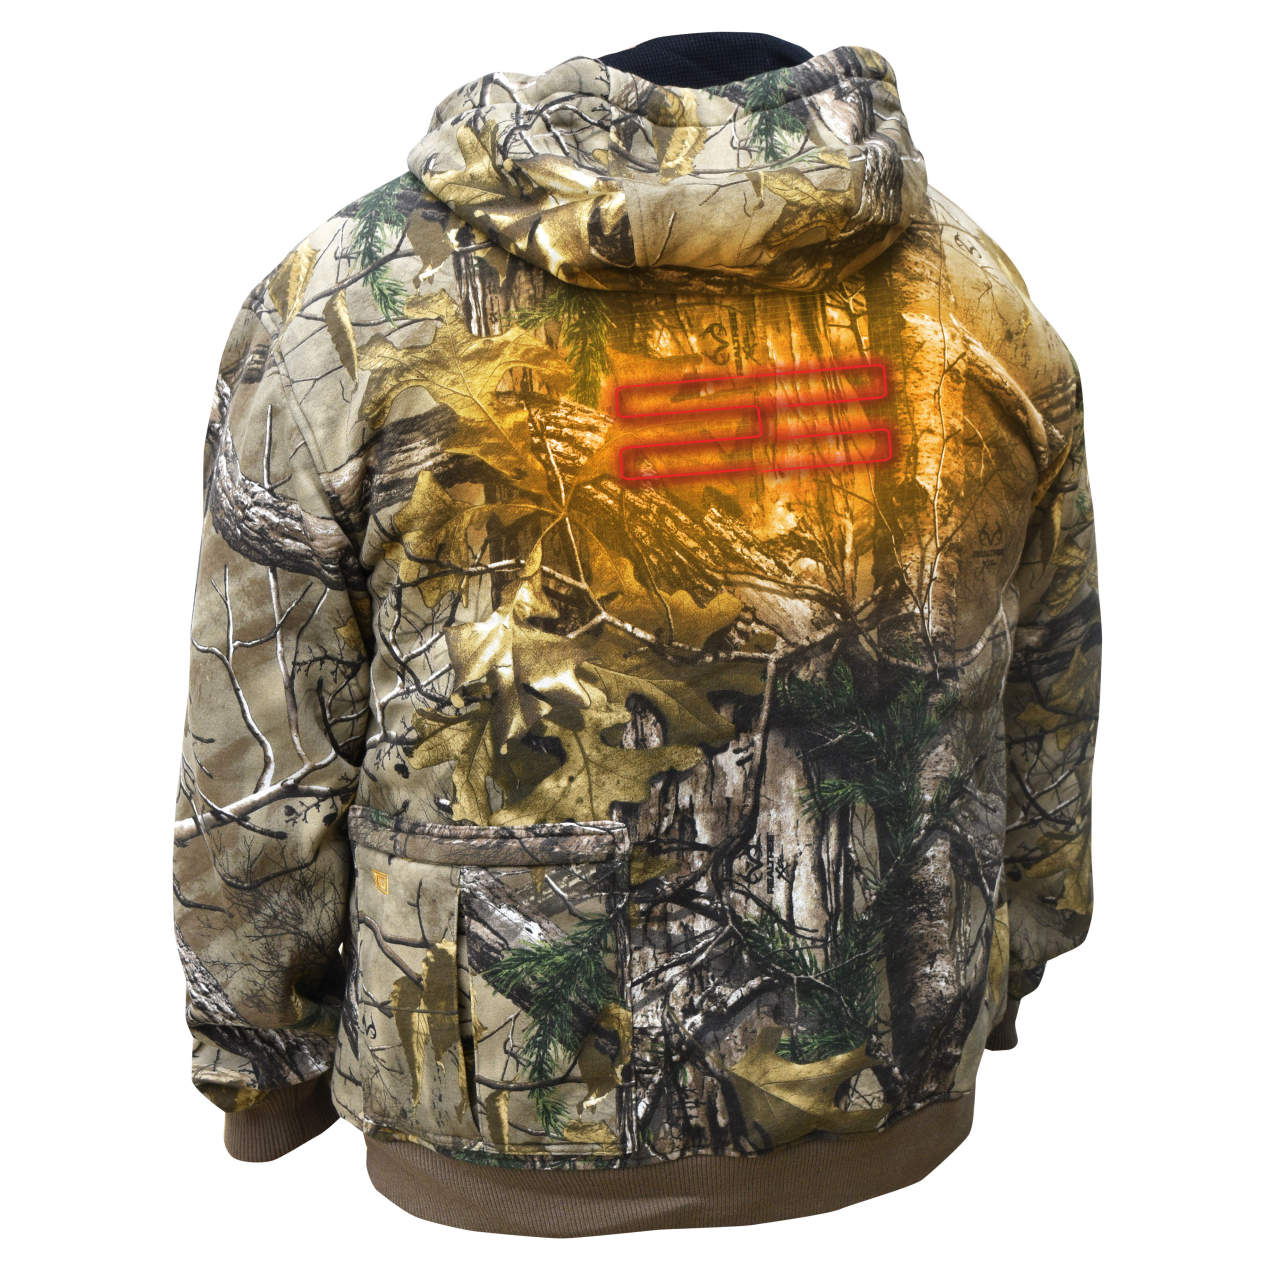 DEWALT® DCHJ074D1 - Men's Heated Realtree Xtra® Camouflage Hoodie Sweatshirt Kitted